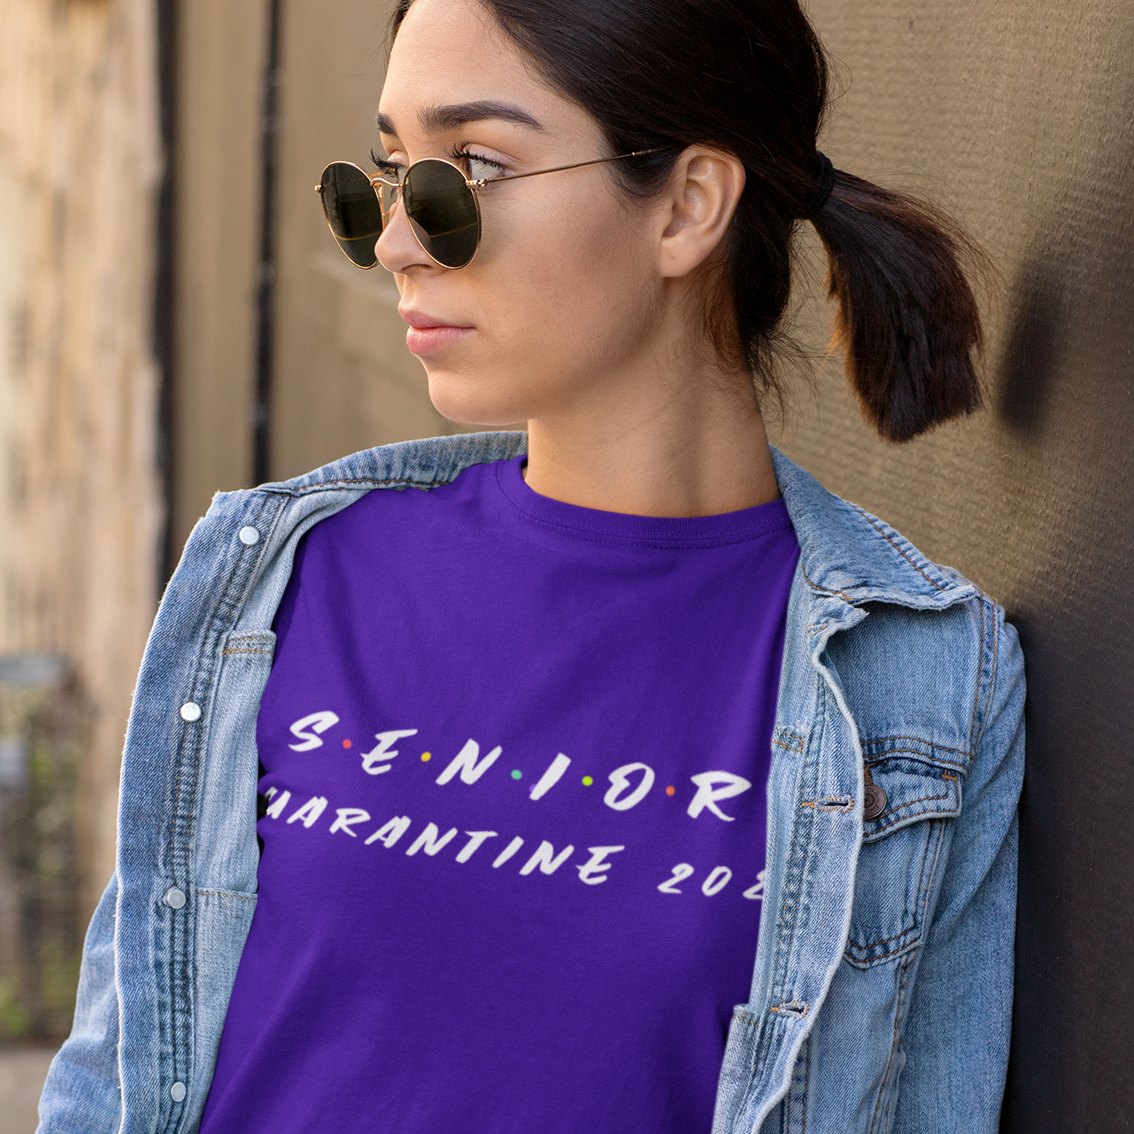 senior graduating class 2020 quarantine tee shirt